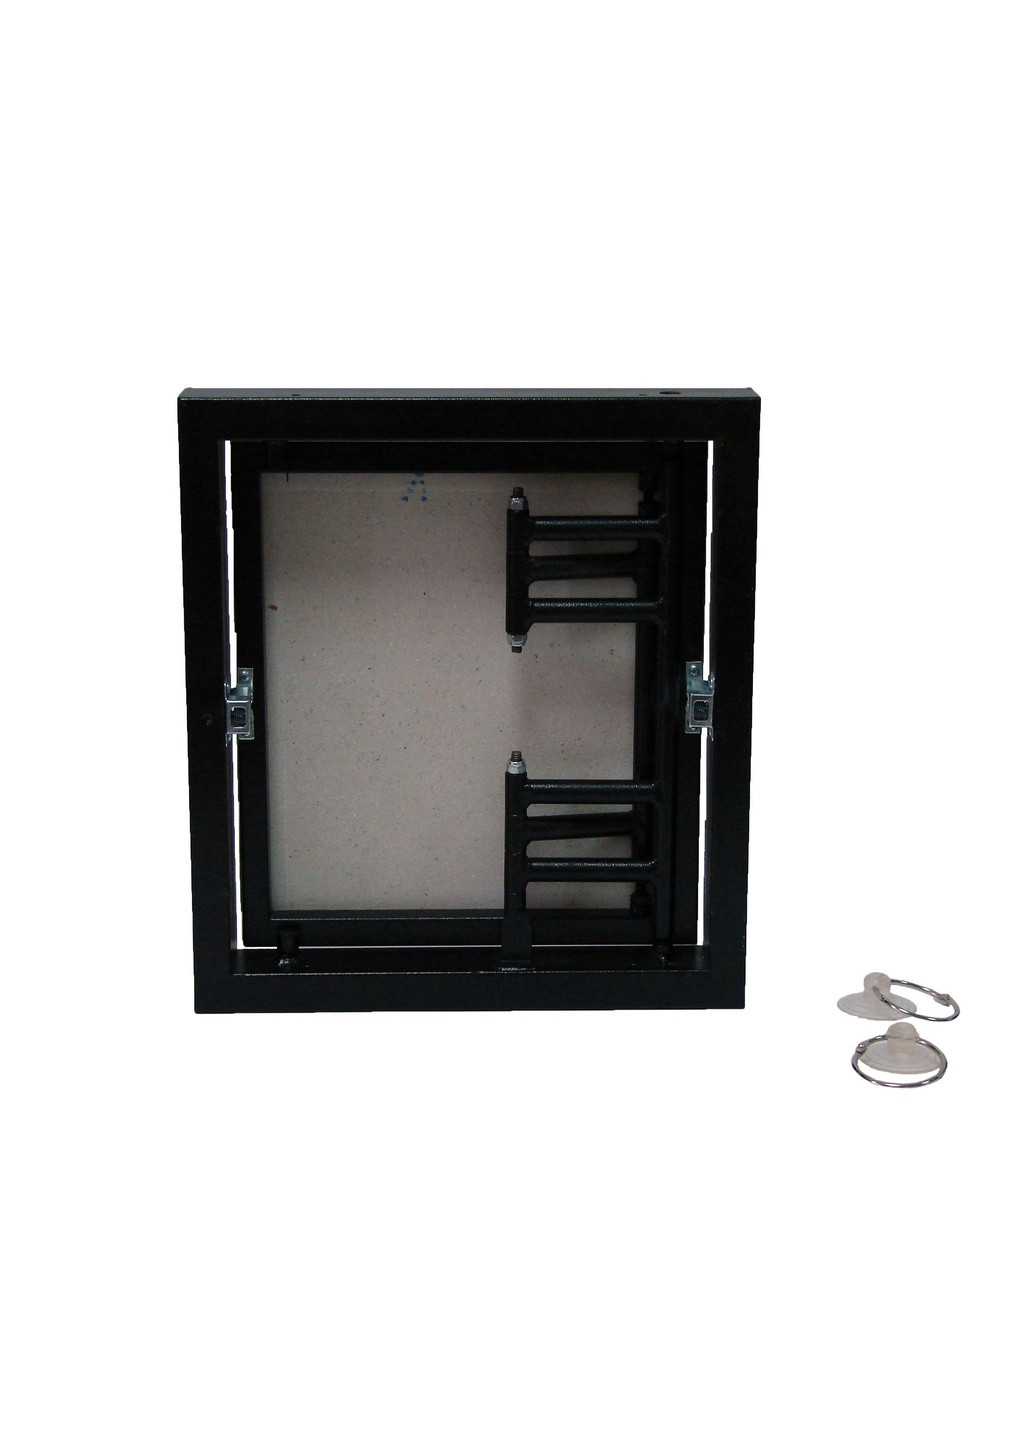 Ревизионный люк скрытого монтажа под плитку фронтальнораспашного типа 250x300 ревизионная дверца для плитки (1215) S-Dom (264208710)